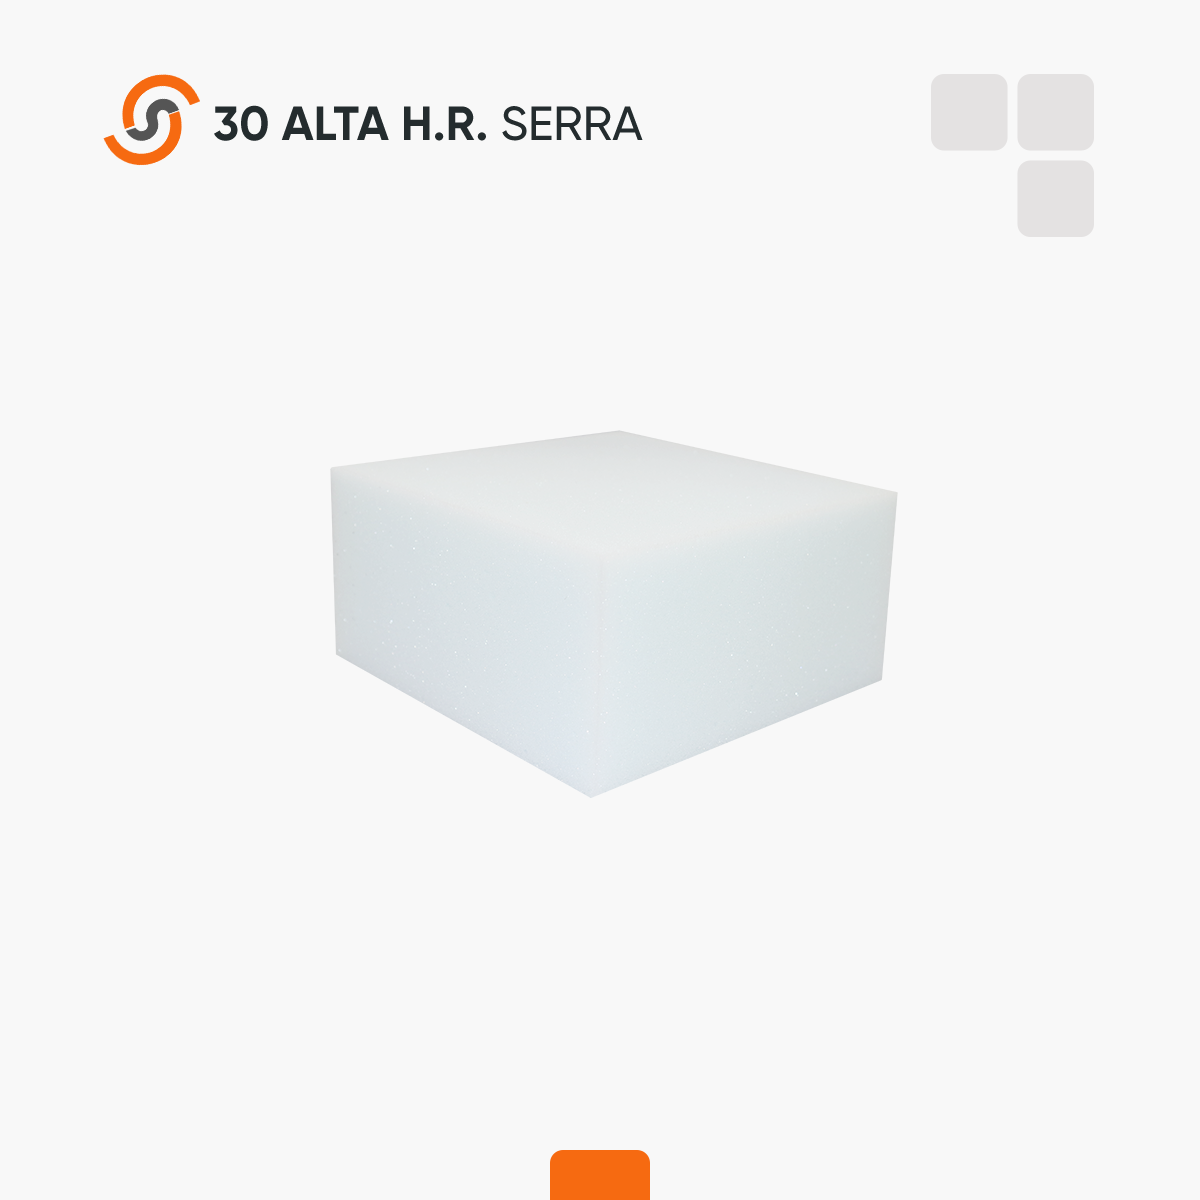 30 Alta H.R. Serra